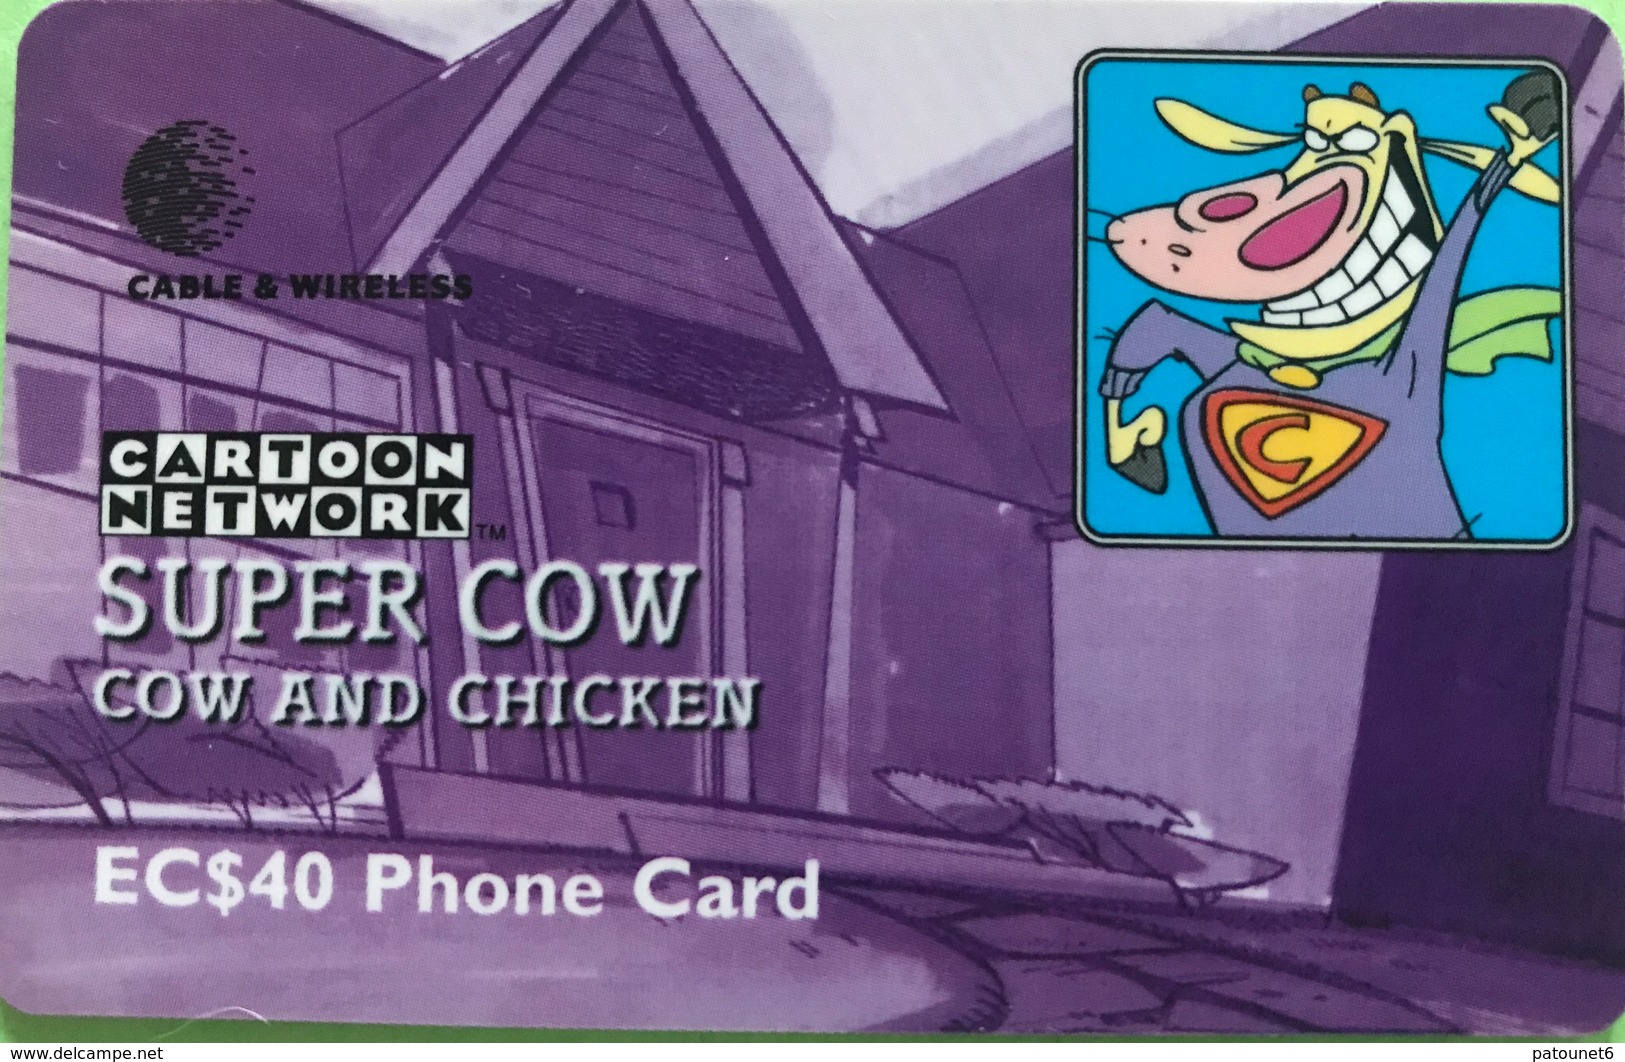 SAINTE LUCIE  -  Phonecard  - Cable & Wireless   - Super Cow  -  EC $ 40 - St. Lucia